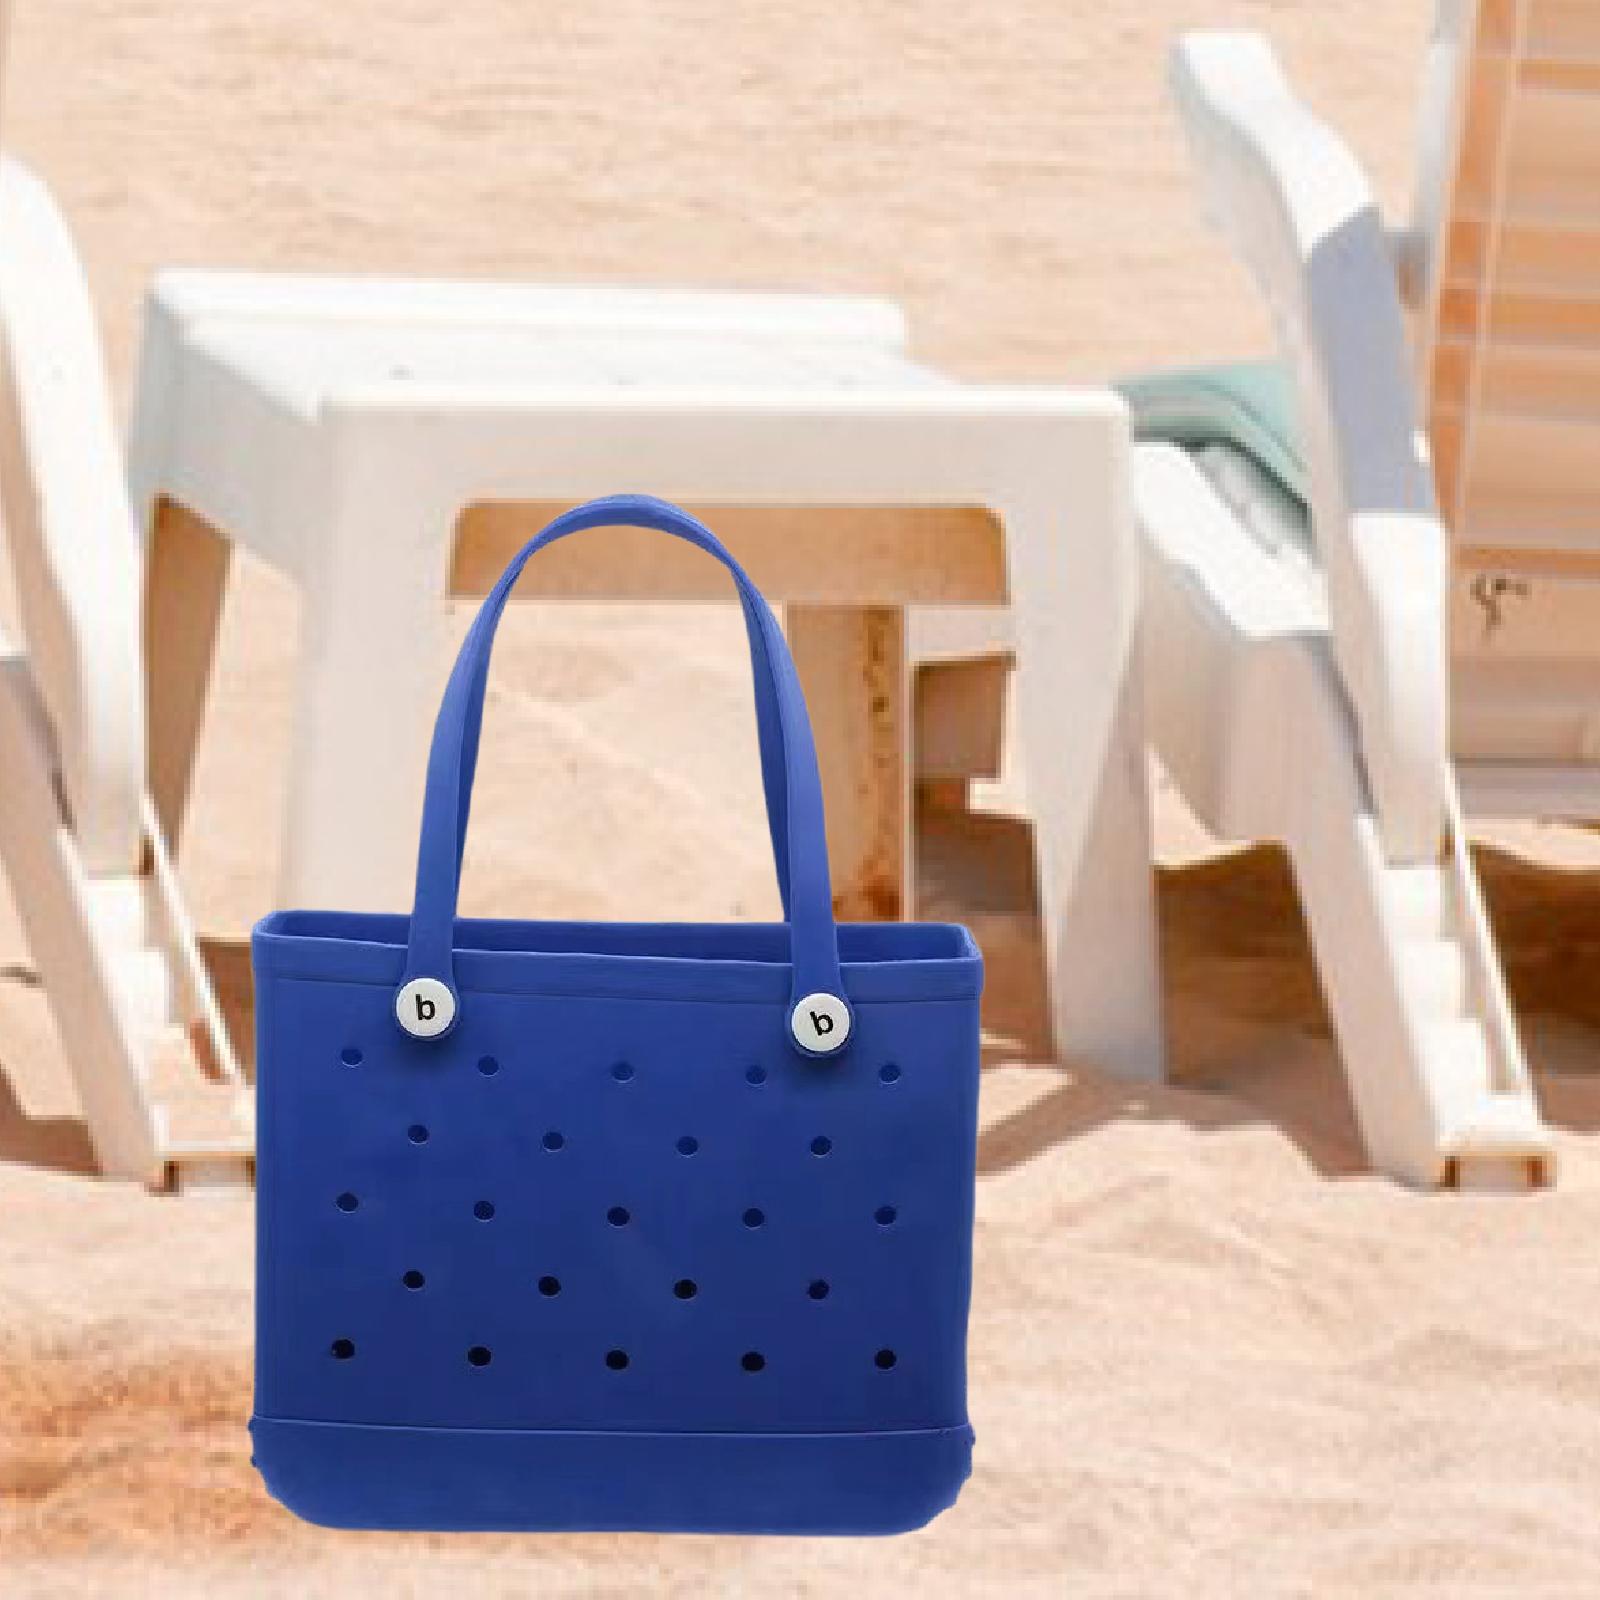 Beach Tote Bag Lightweight Waterproof Beach Handbag for Outdoor Holiday Shopping 48cmx24cmx36cm Royal Blue